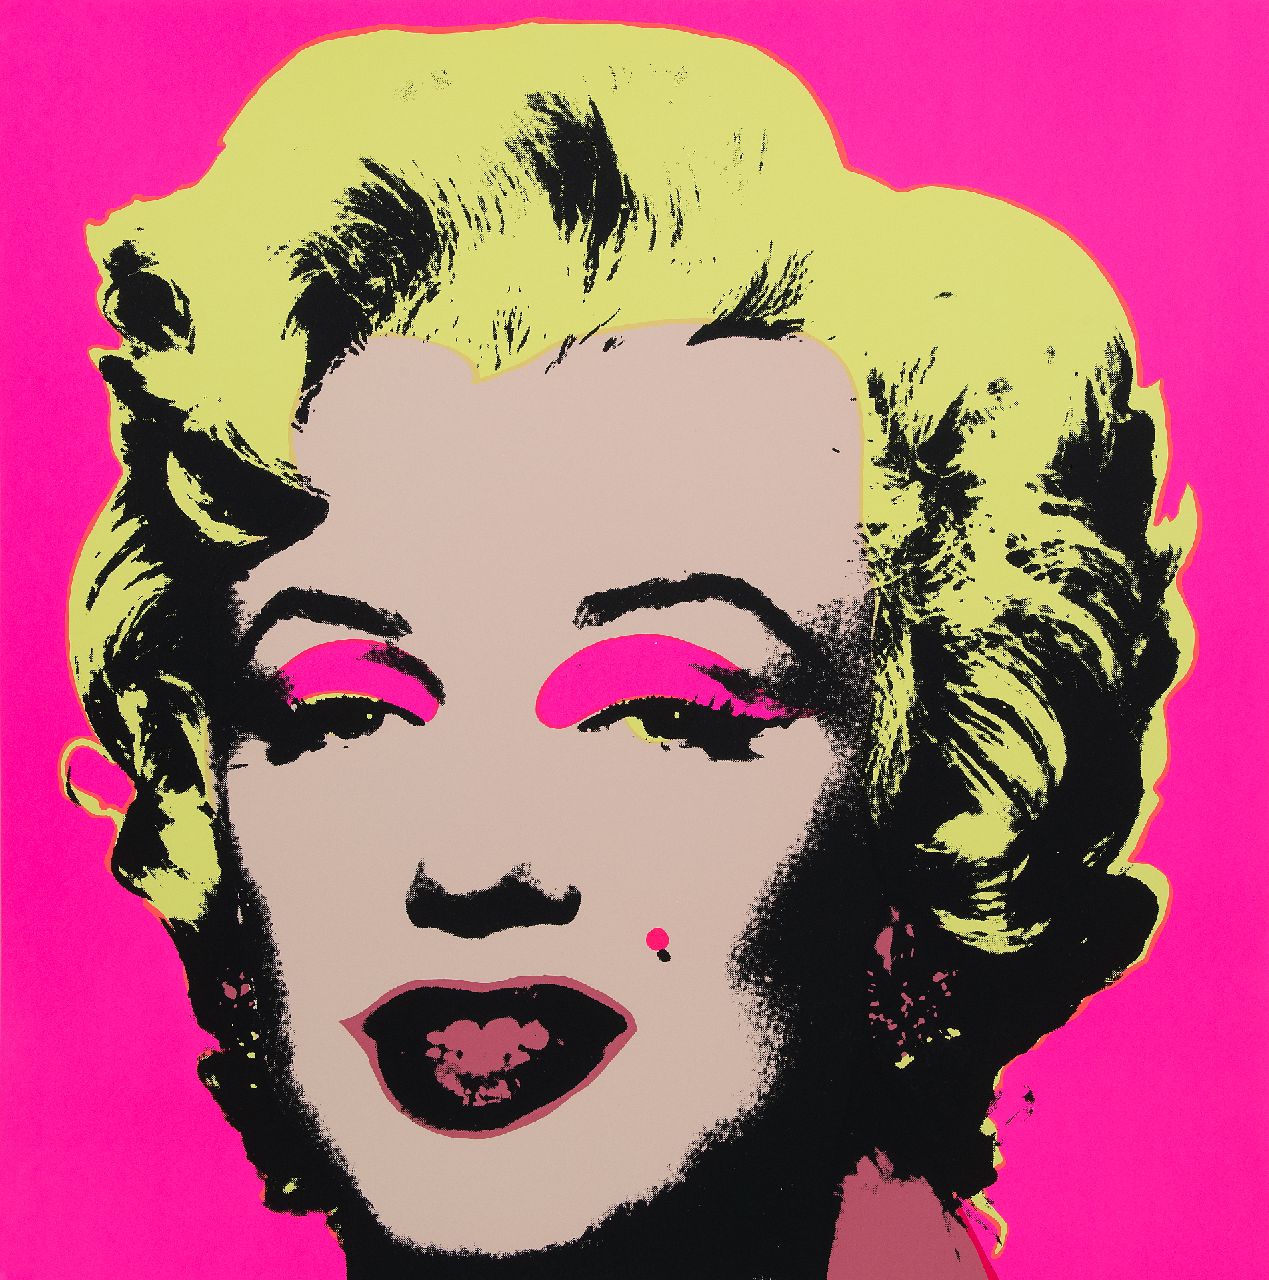 Naar Andy Warhol   | Naar Andy Warhol | Prints and Multiples offered for sale | Marilyn, screenprint on paper 91.0 x 91.0 cm, prijs zonder lijst